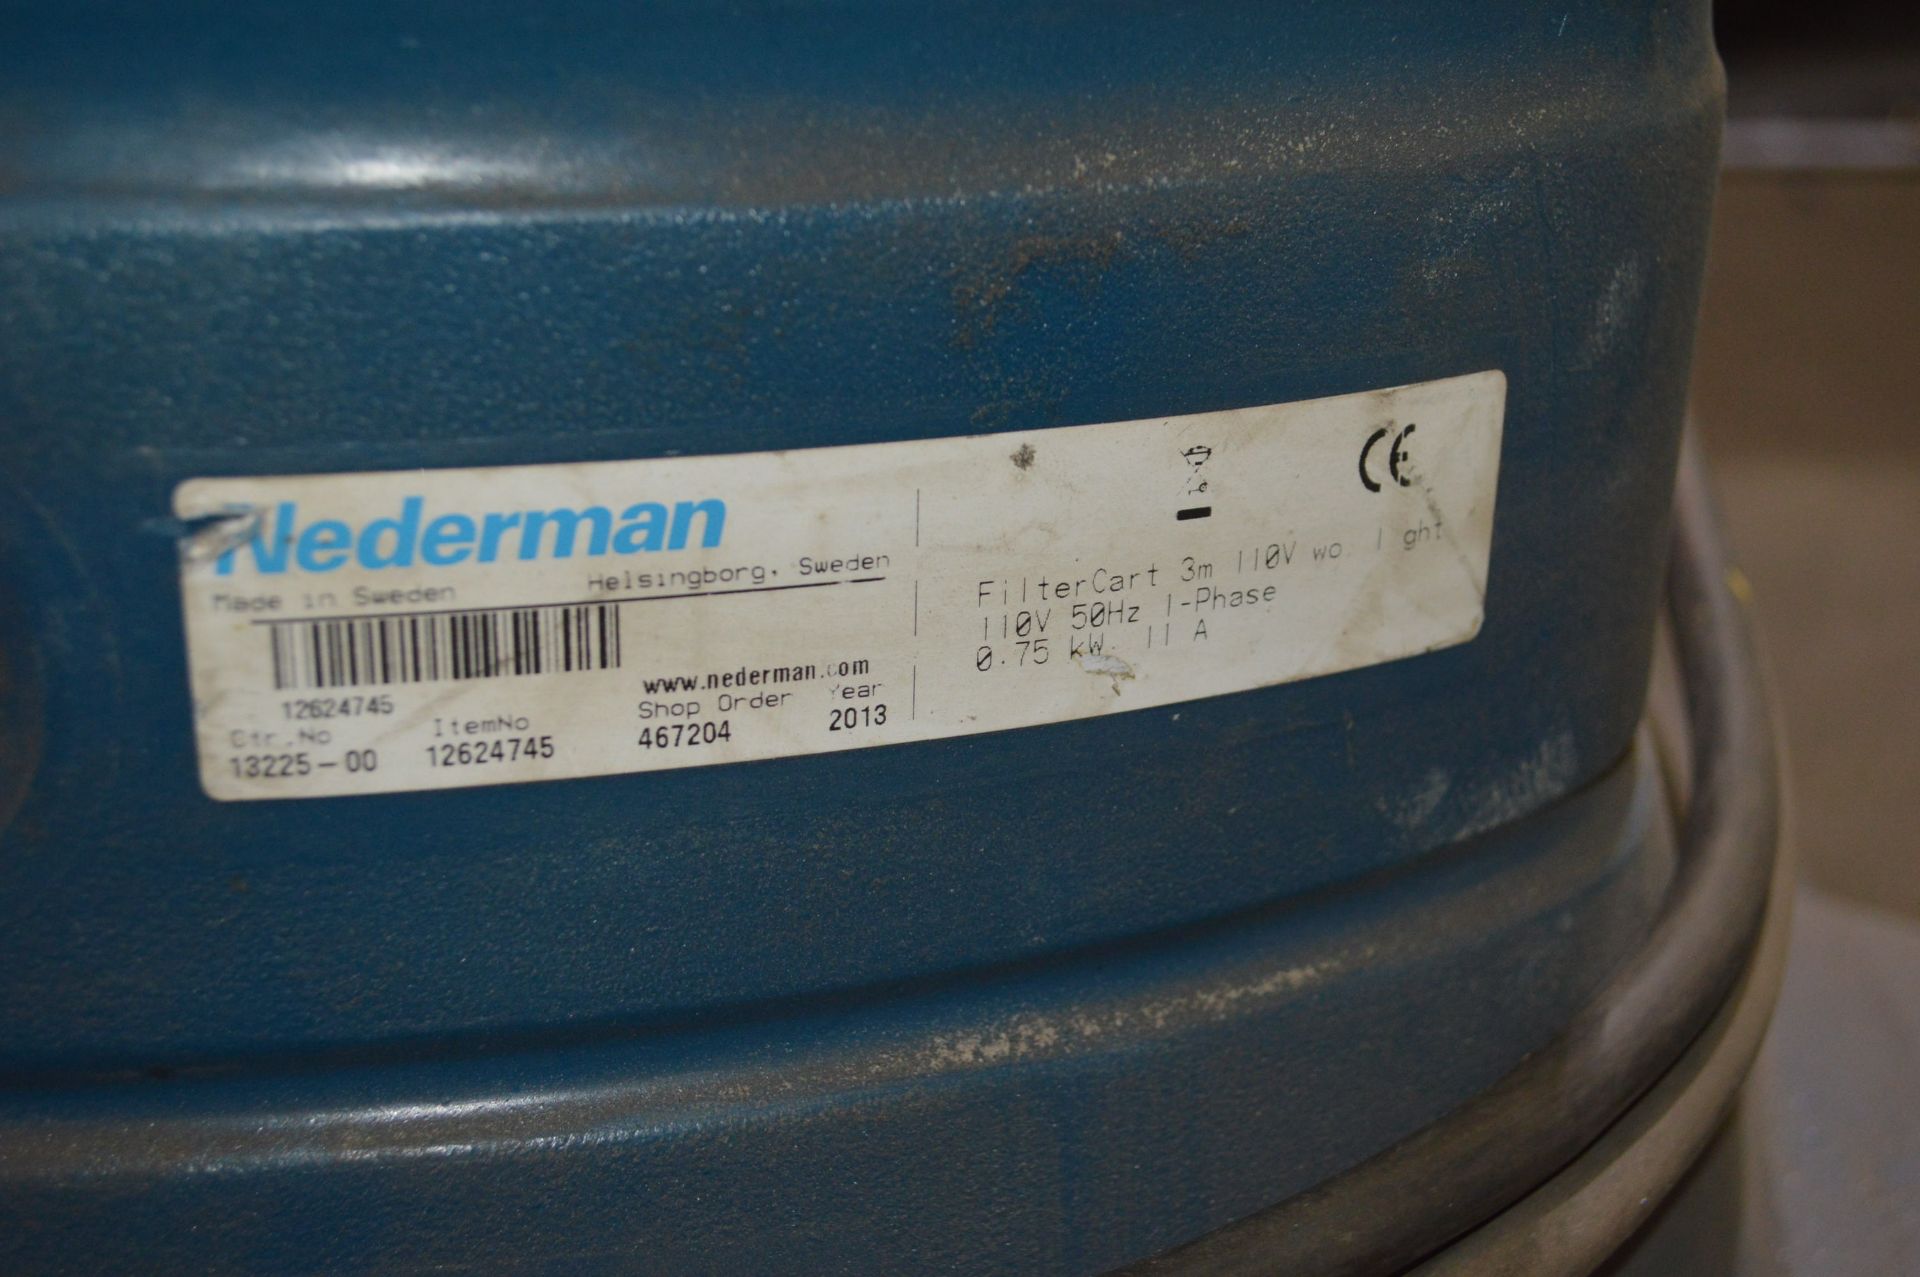 Nederman 13225-00 Mobile Fume Extraction Unit, serial no. 12624745 - Bild 4 aus 4